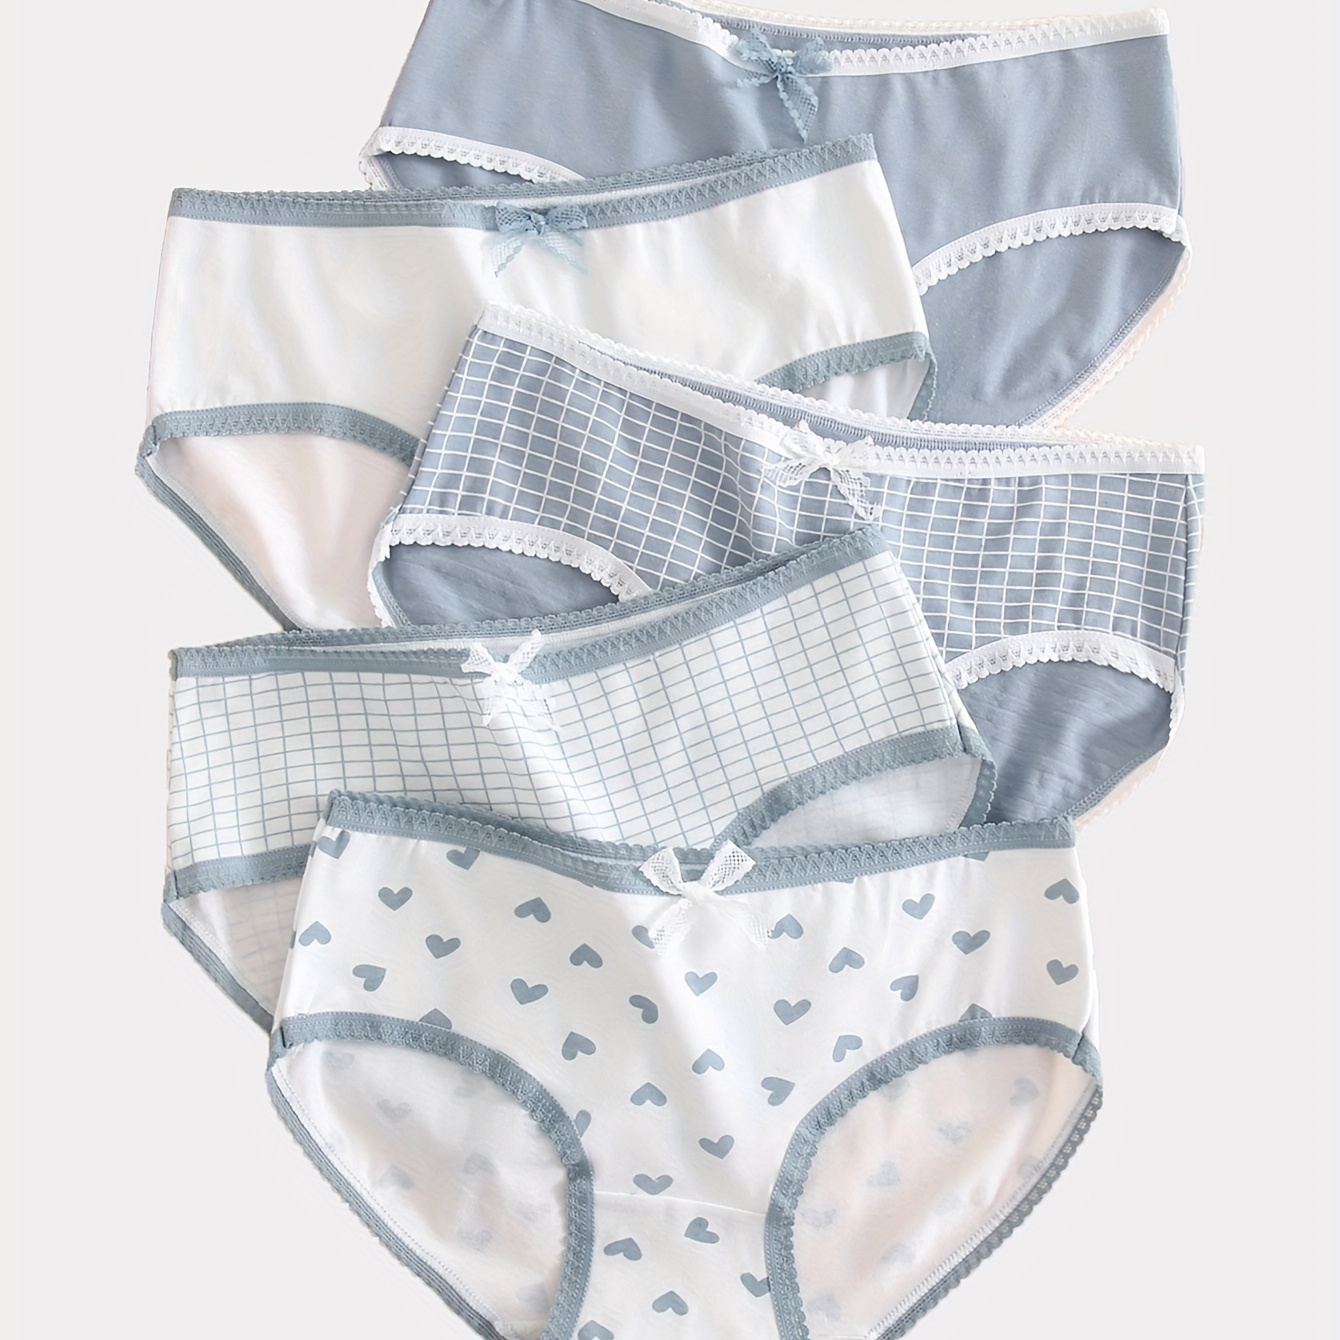 

5pcs Contrast Trim Heart Print Seamless Briefs, Cute Comfy Breathable Stretchy Intimates Panties, Women's Lingerie & Underwear